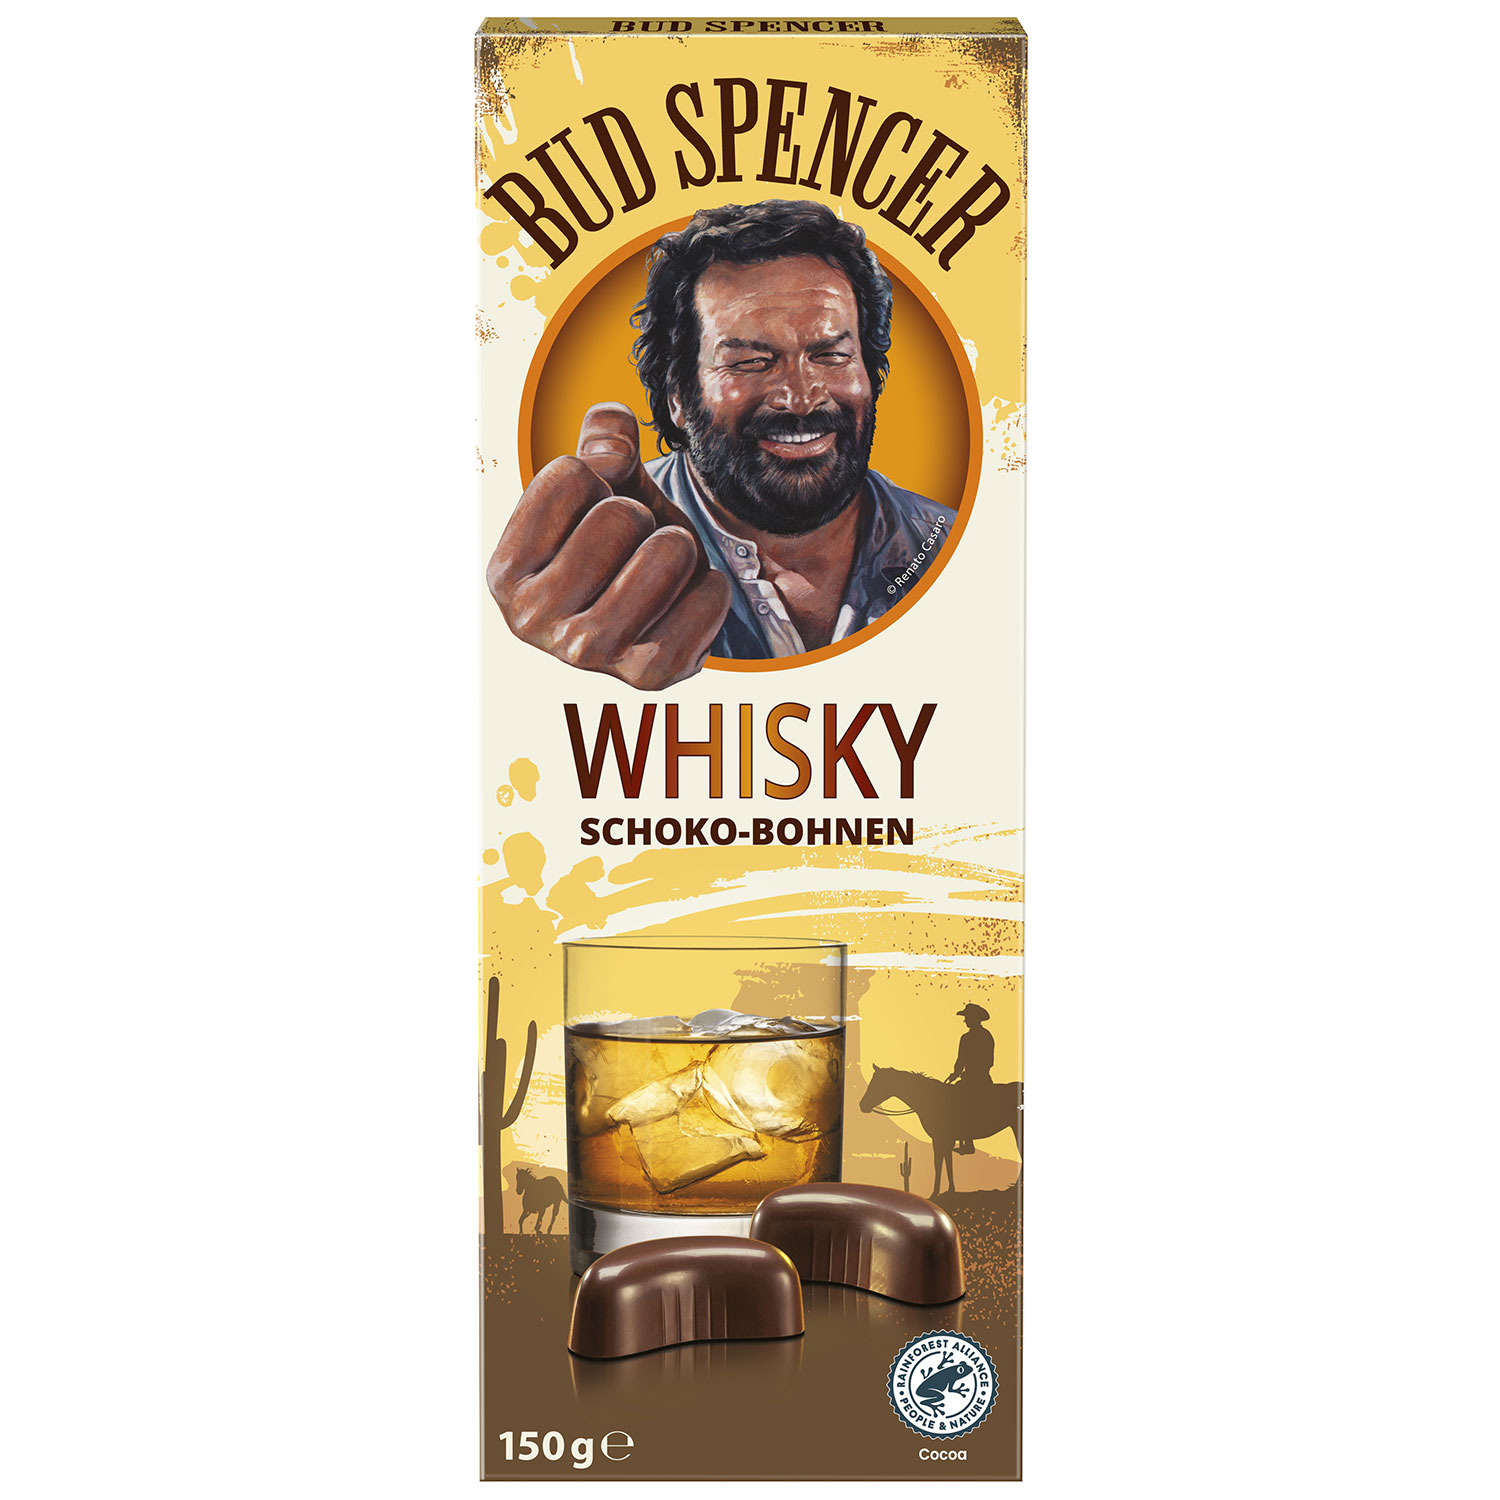 Bud Spencer - Whisky Schoko-Bohnen